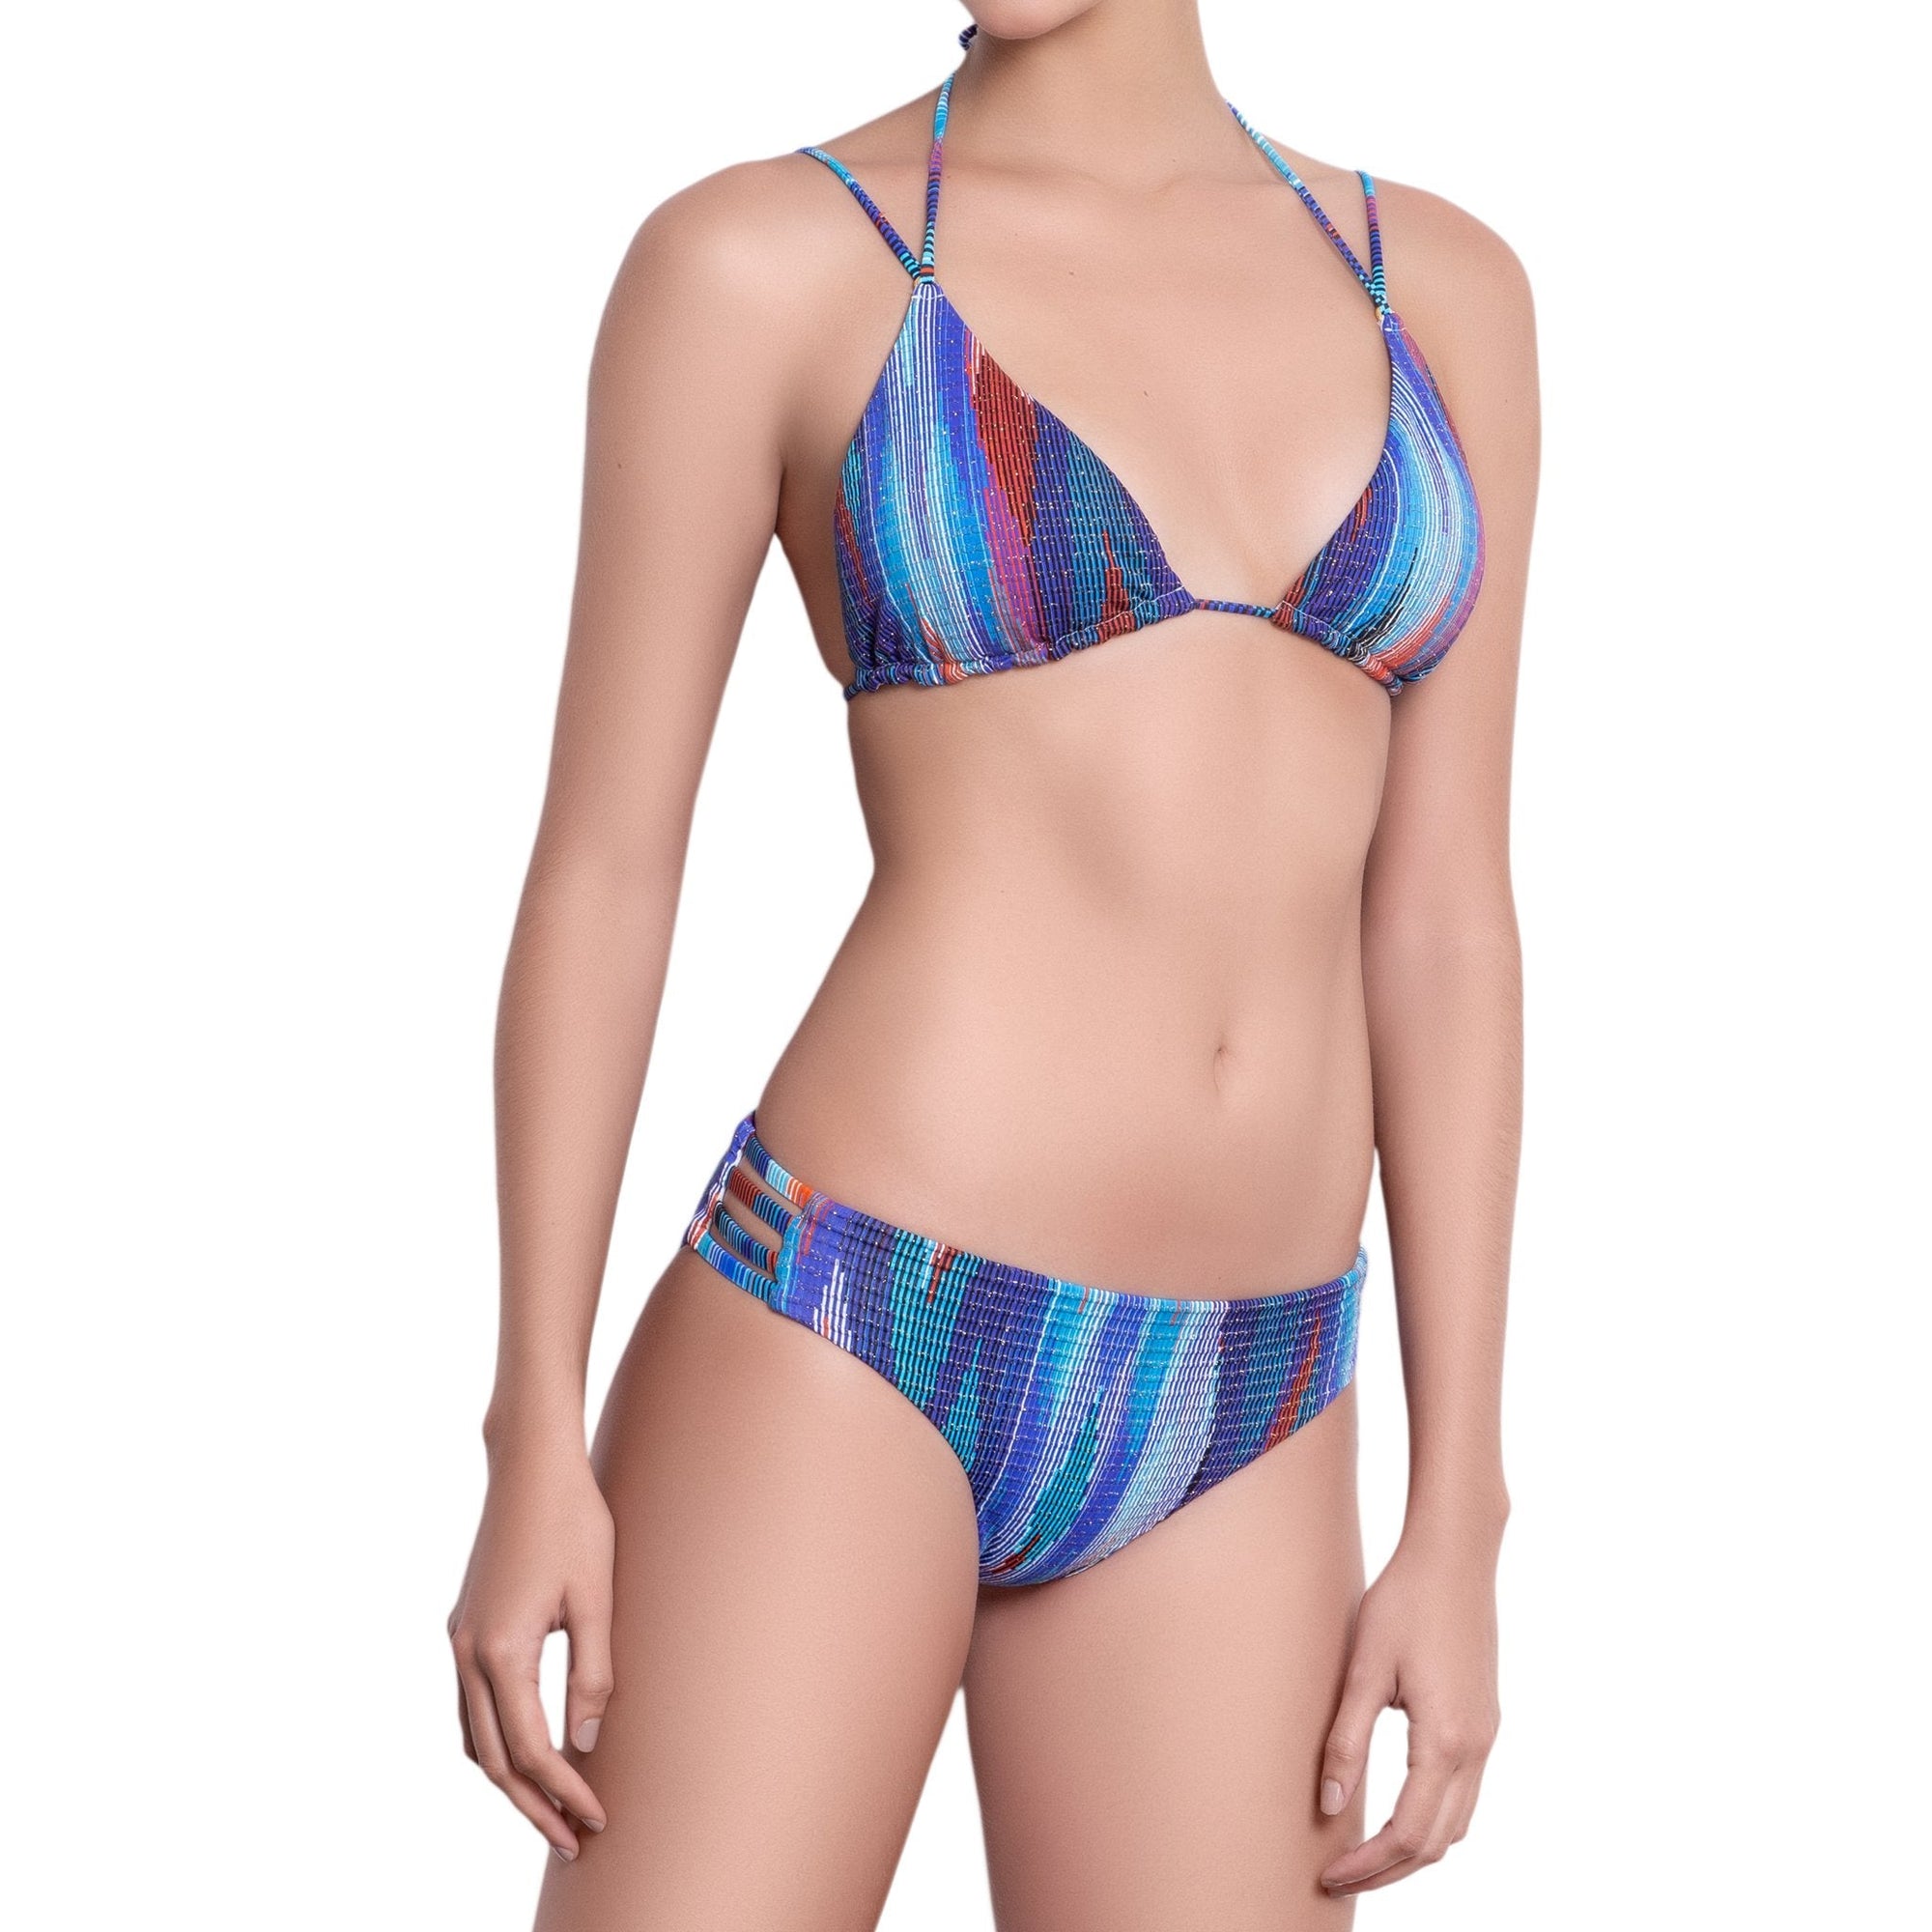 EVA strappy panty, textured printed bikini bottom by ALMA swimwear‚Äì front view 1